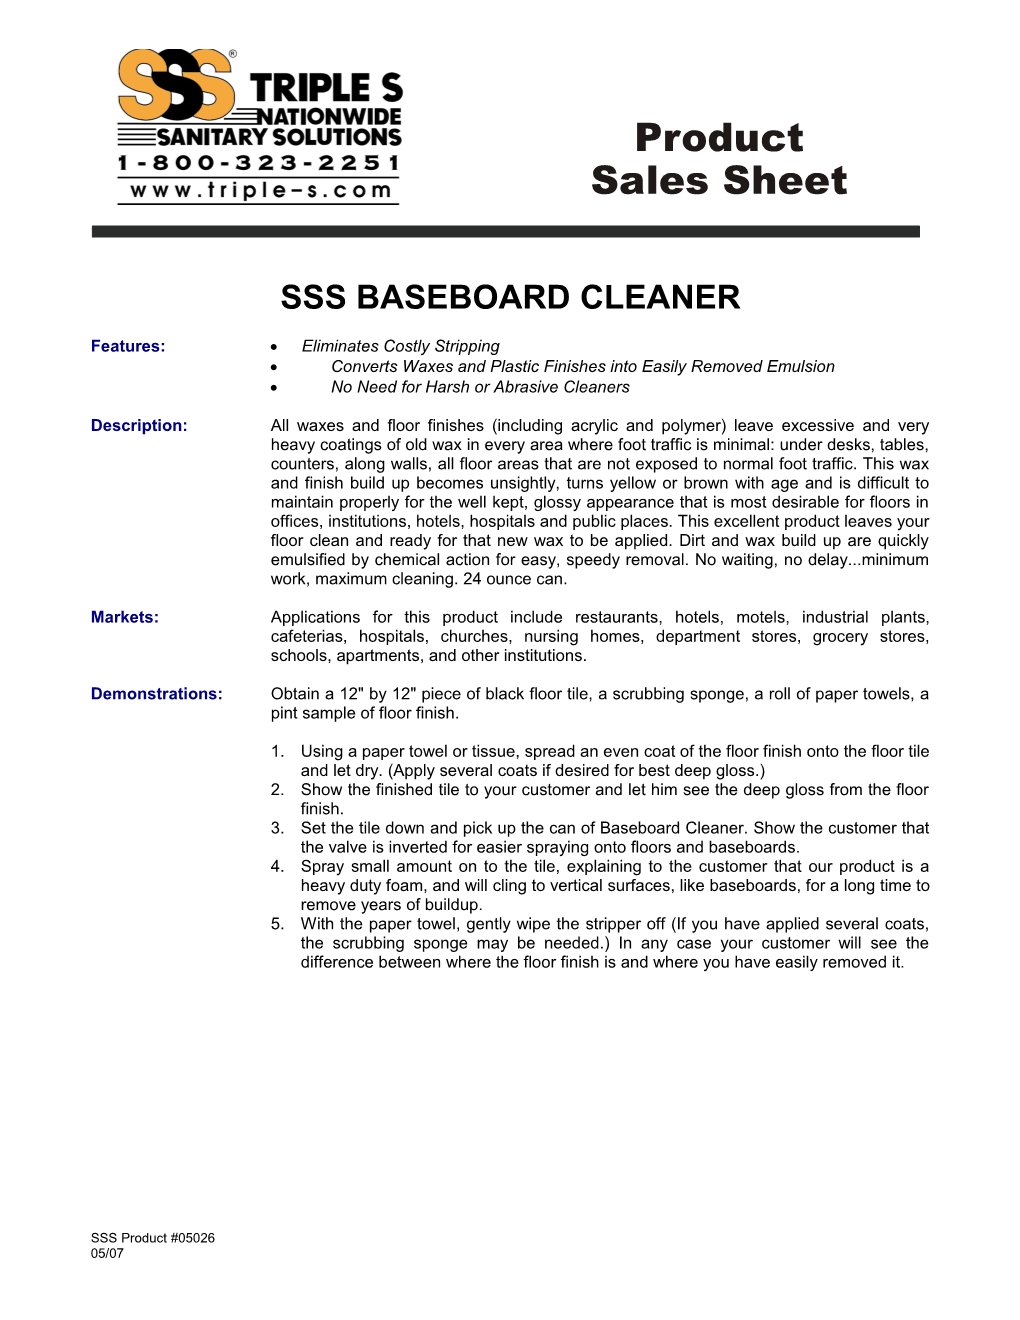 Sss Baseboard Cleaner